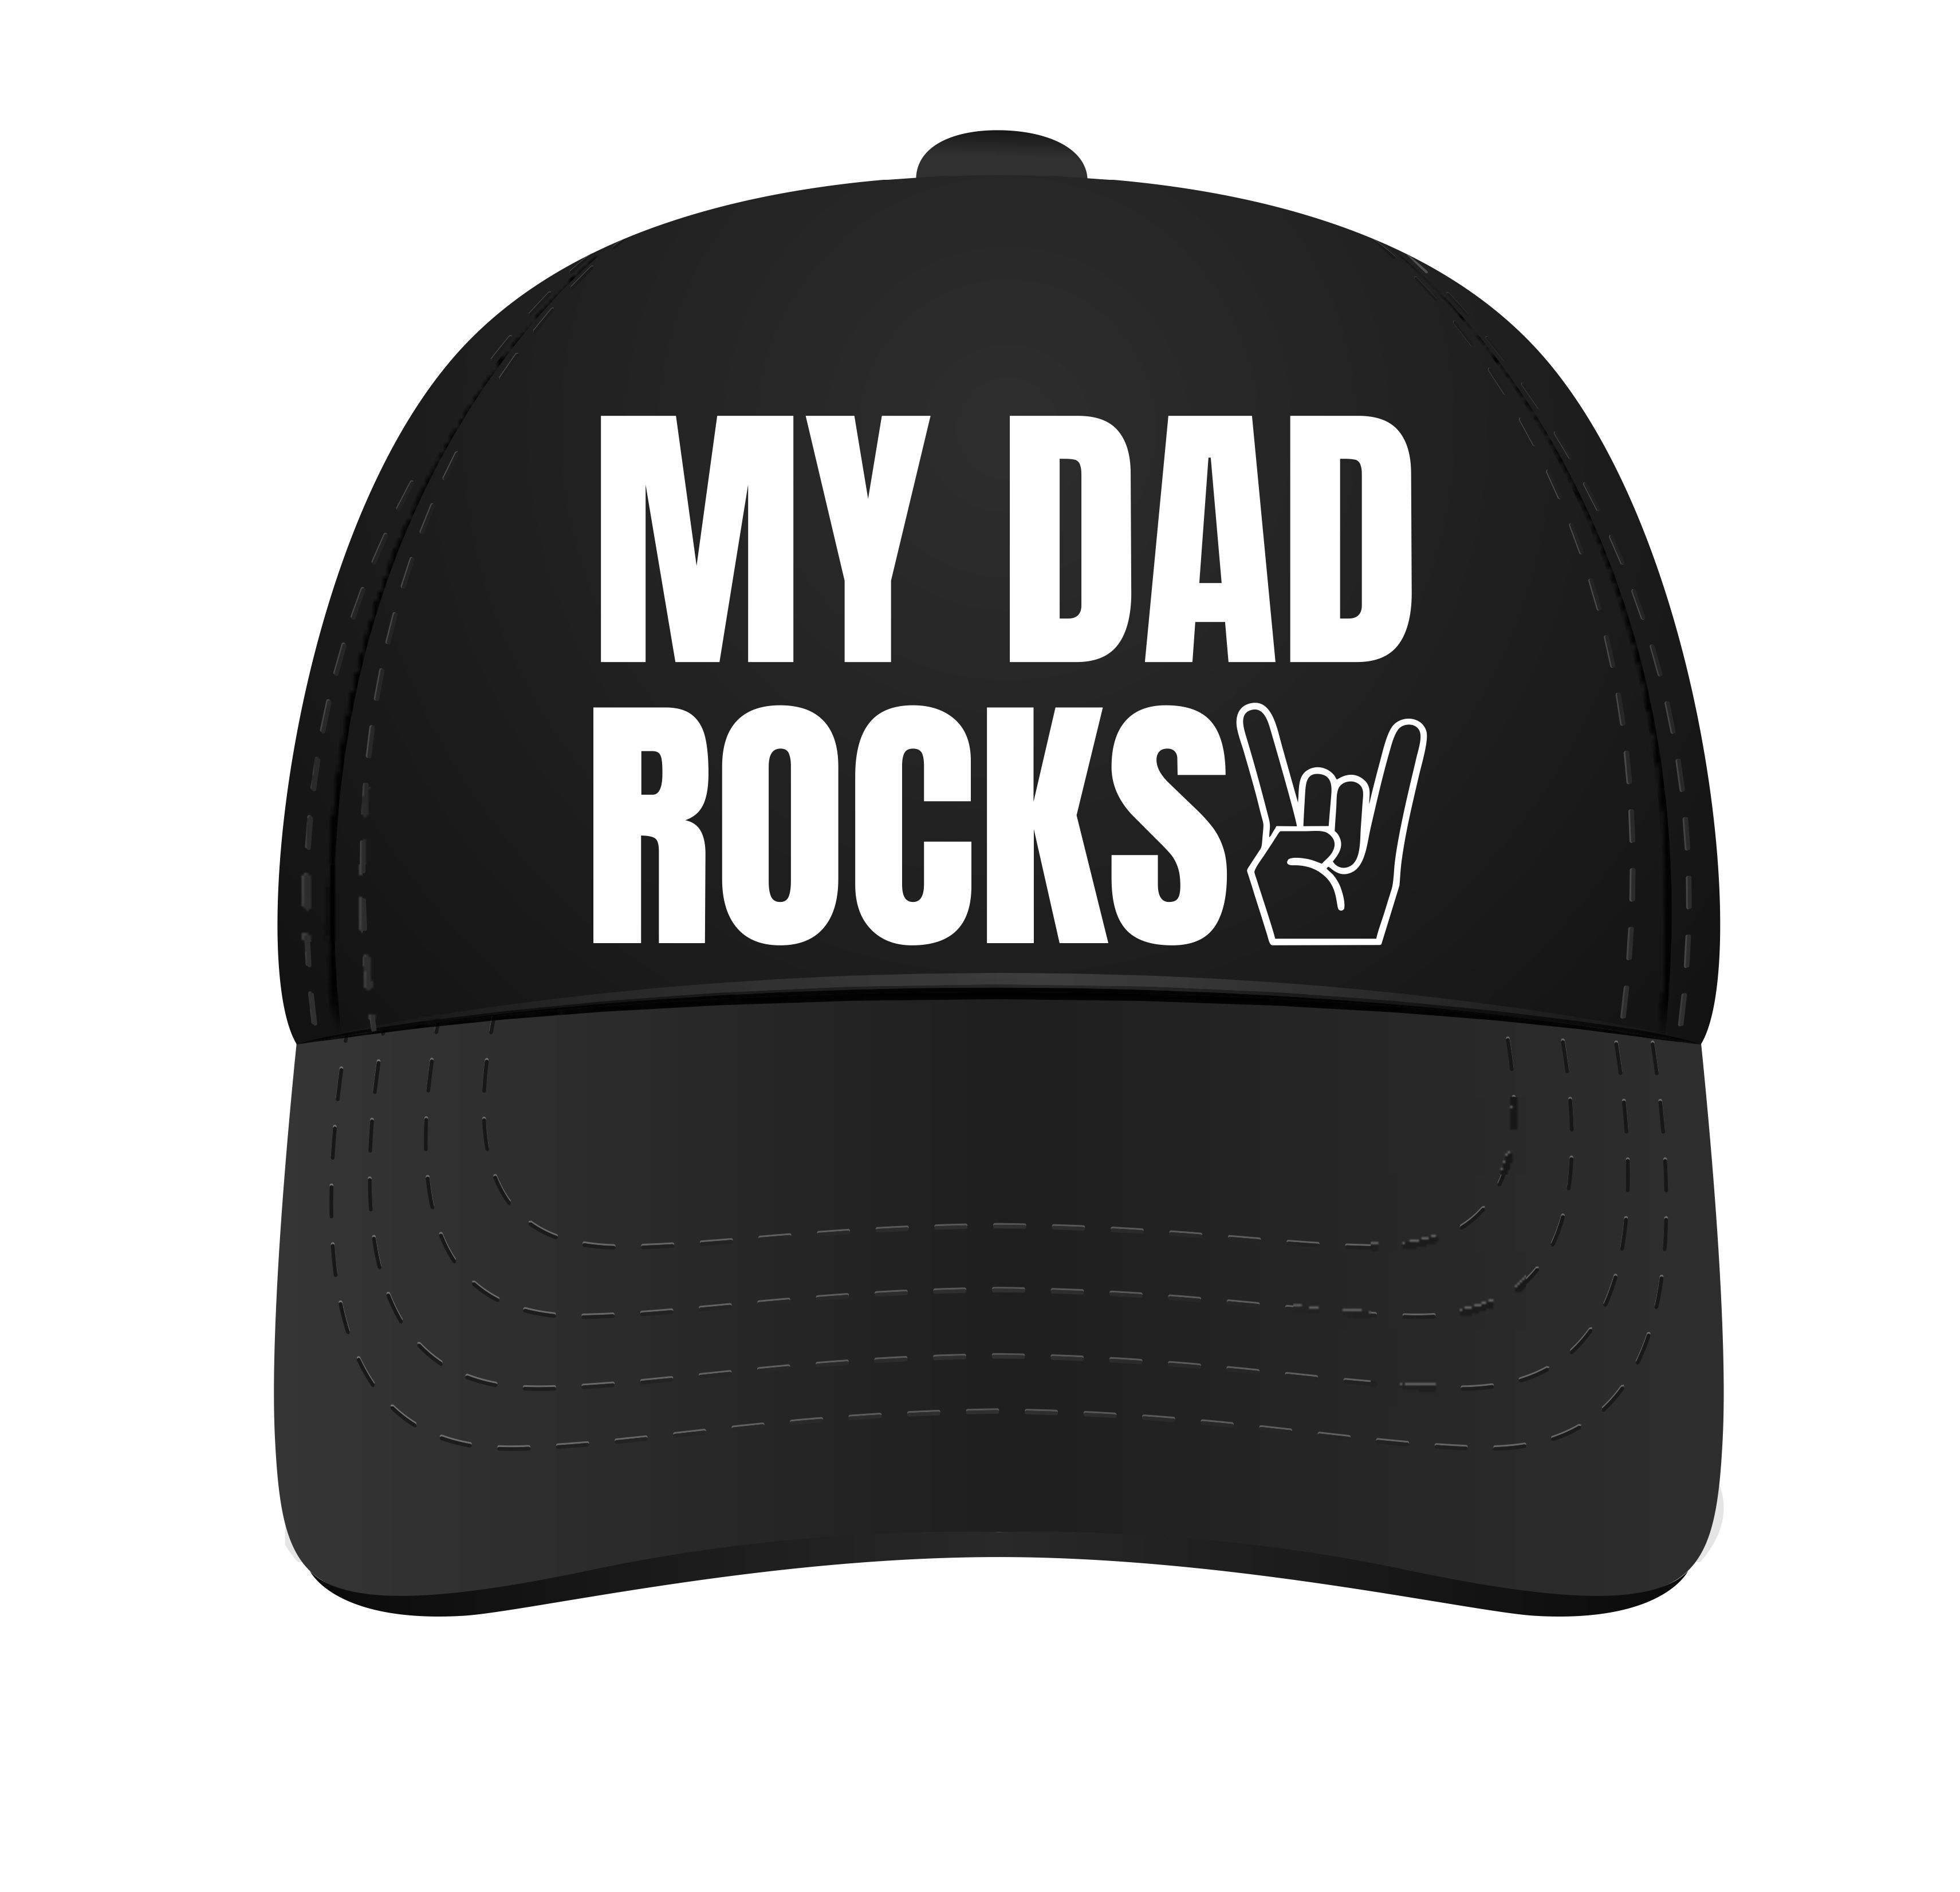 Pet my dad rocks